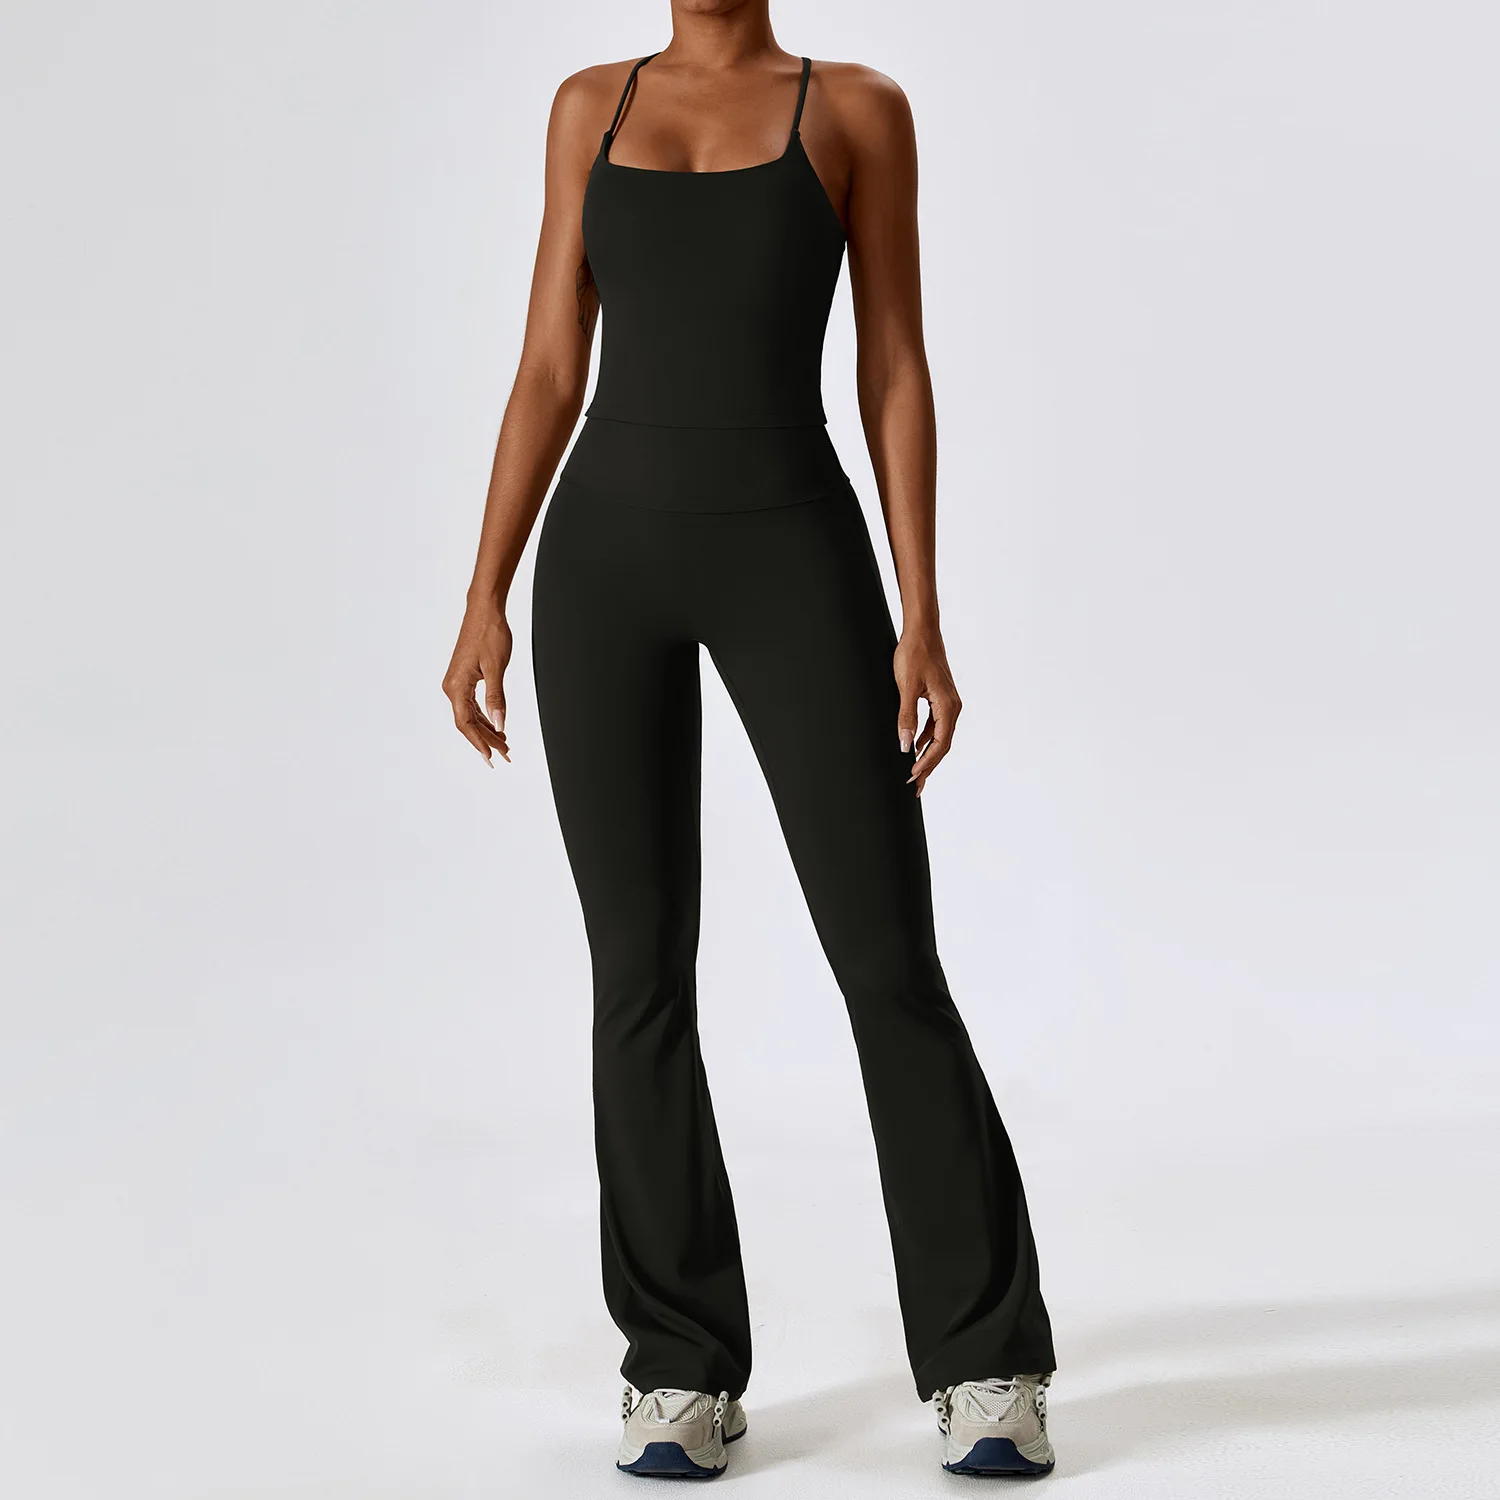 OEM Sportswear High Quality Sport Bra Leggings Yoga Suit Plus Size Workout Gym Fitness Sets For Women